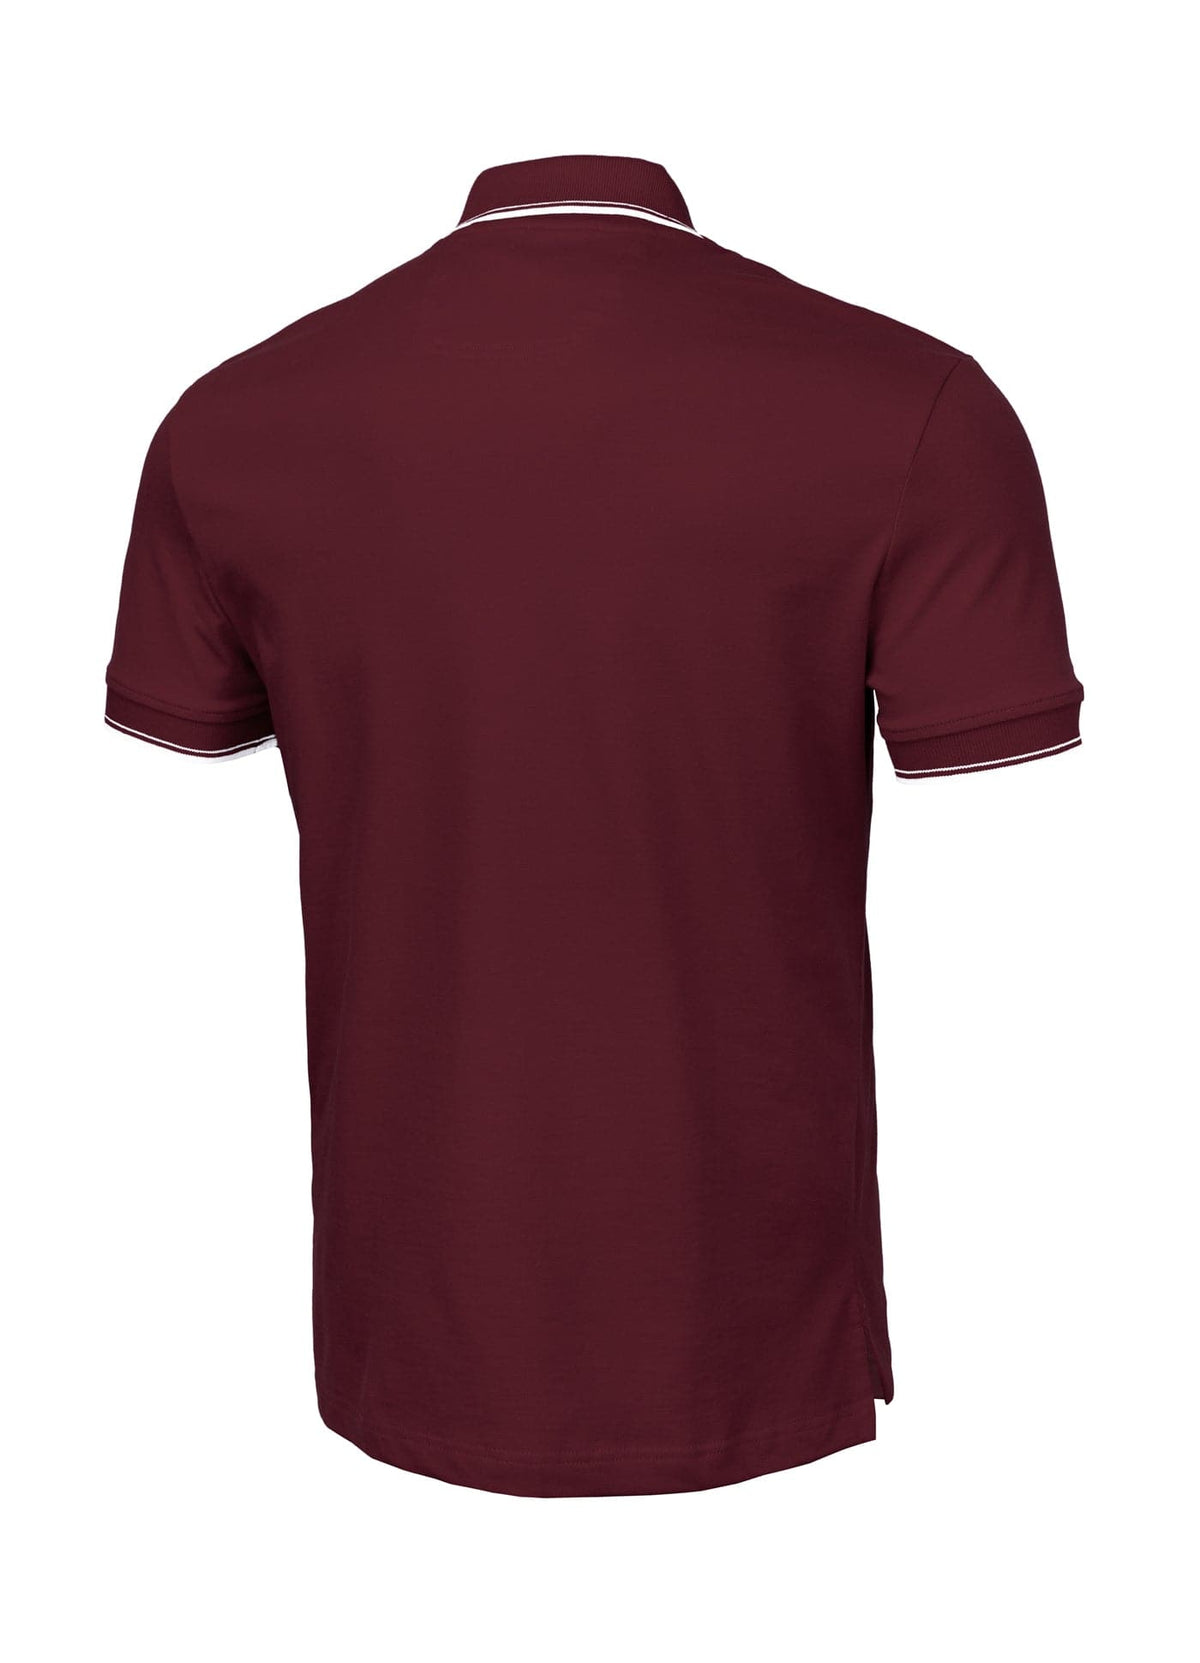 PIQUE STRIPES REGULAR Dark Burgundy Polo T-shirt